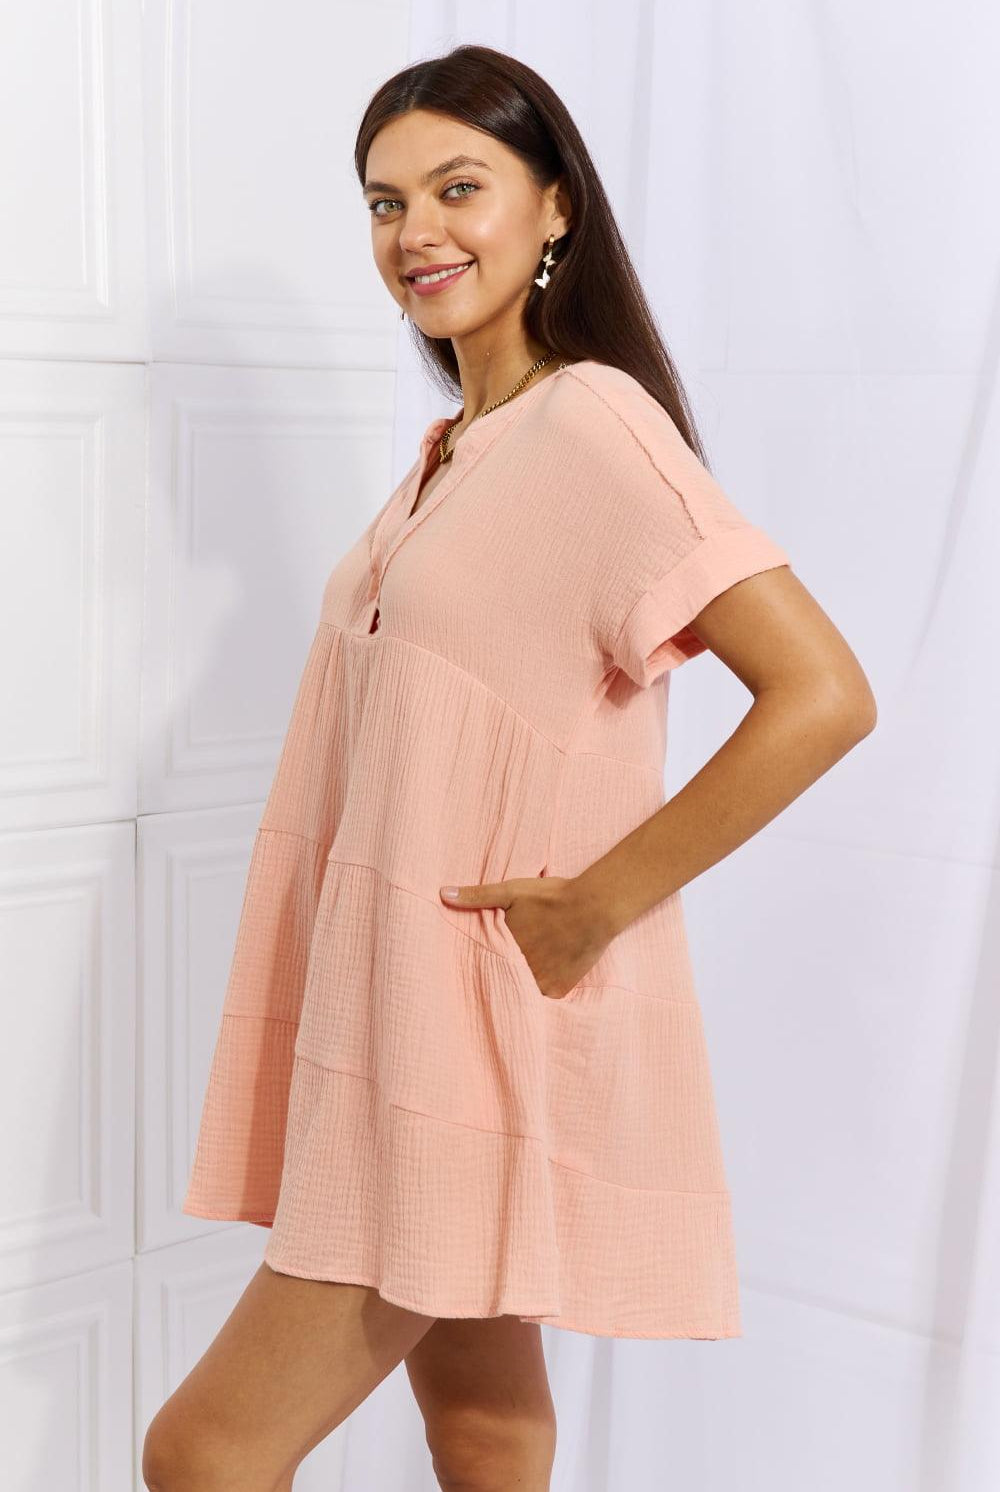 Women's Dresses HEYSON Easy Going Full Size Gauze Tiered Ruffle Mini Dress